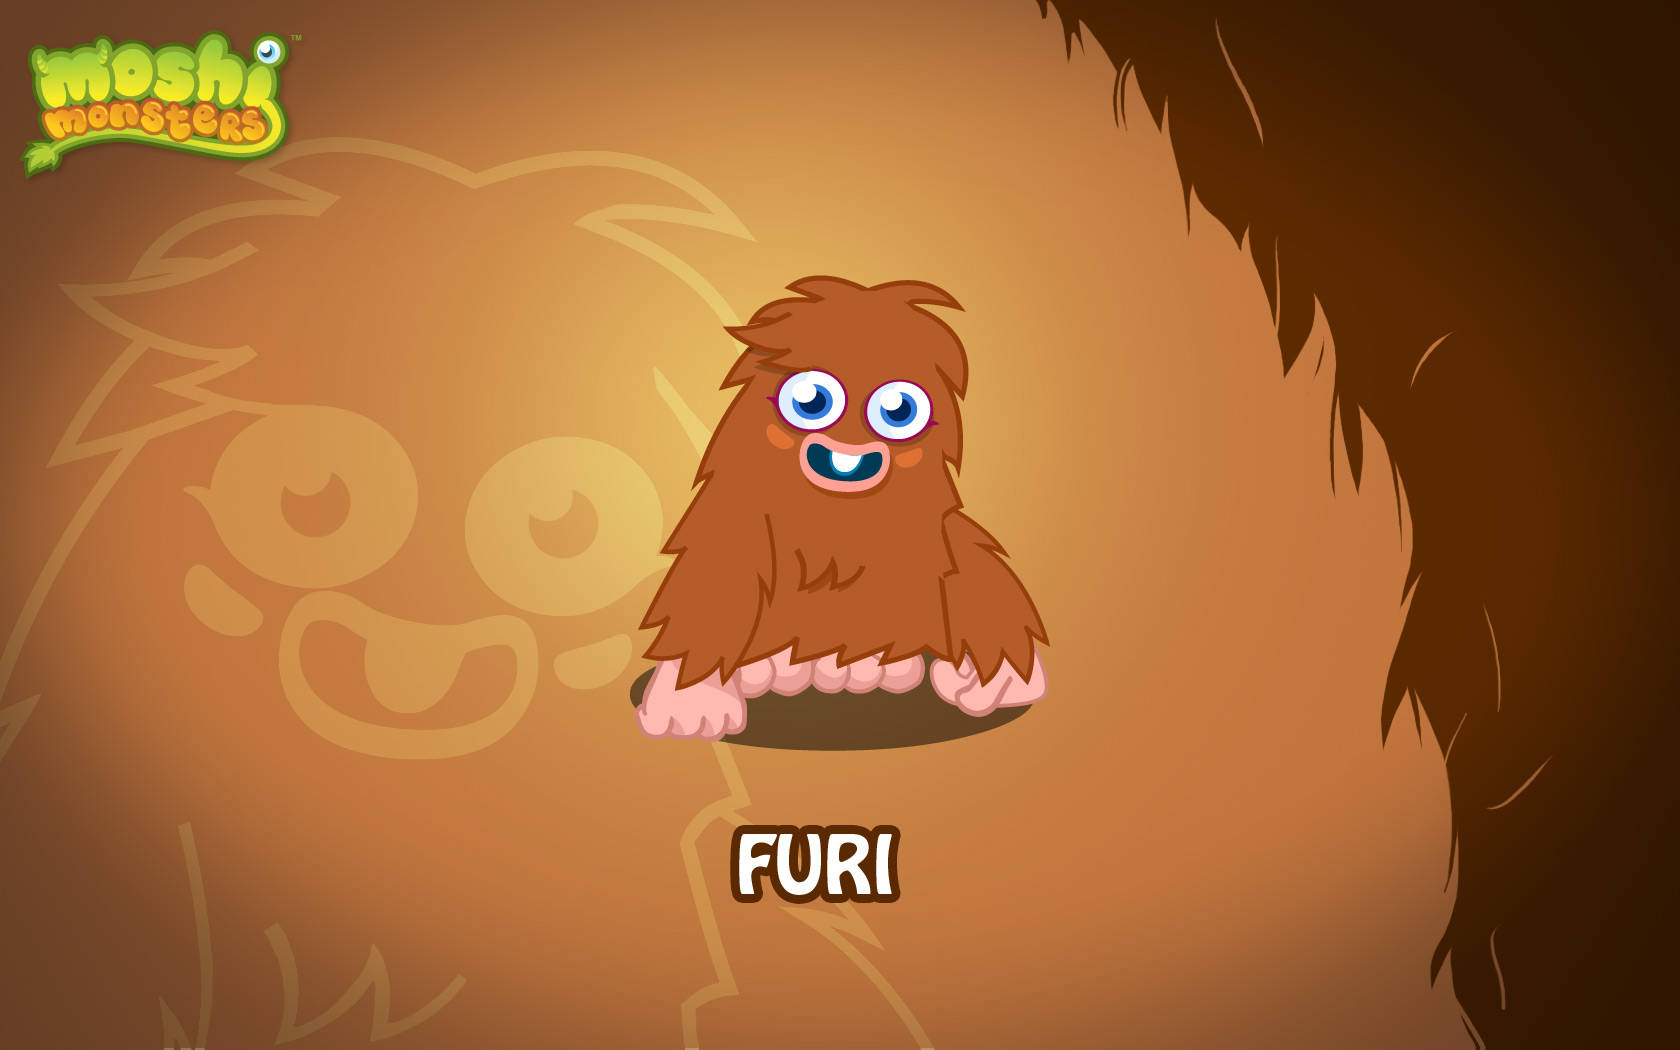 Download Caption: Furry Fun with Moshi Monster's Furi Wallpaper | Wallpapers .com